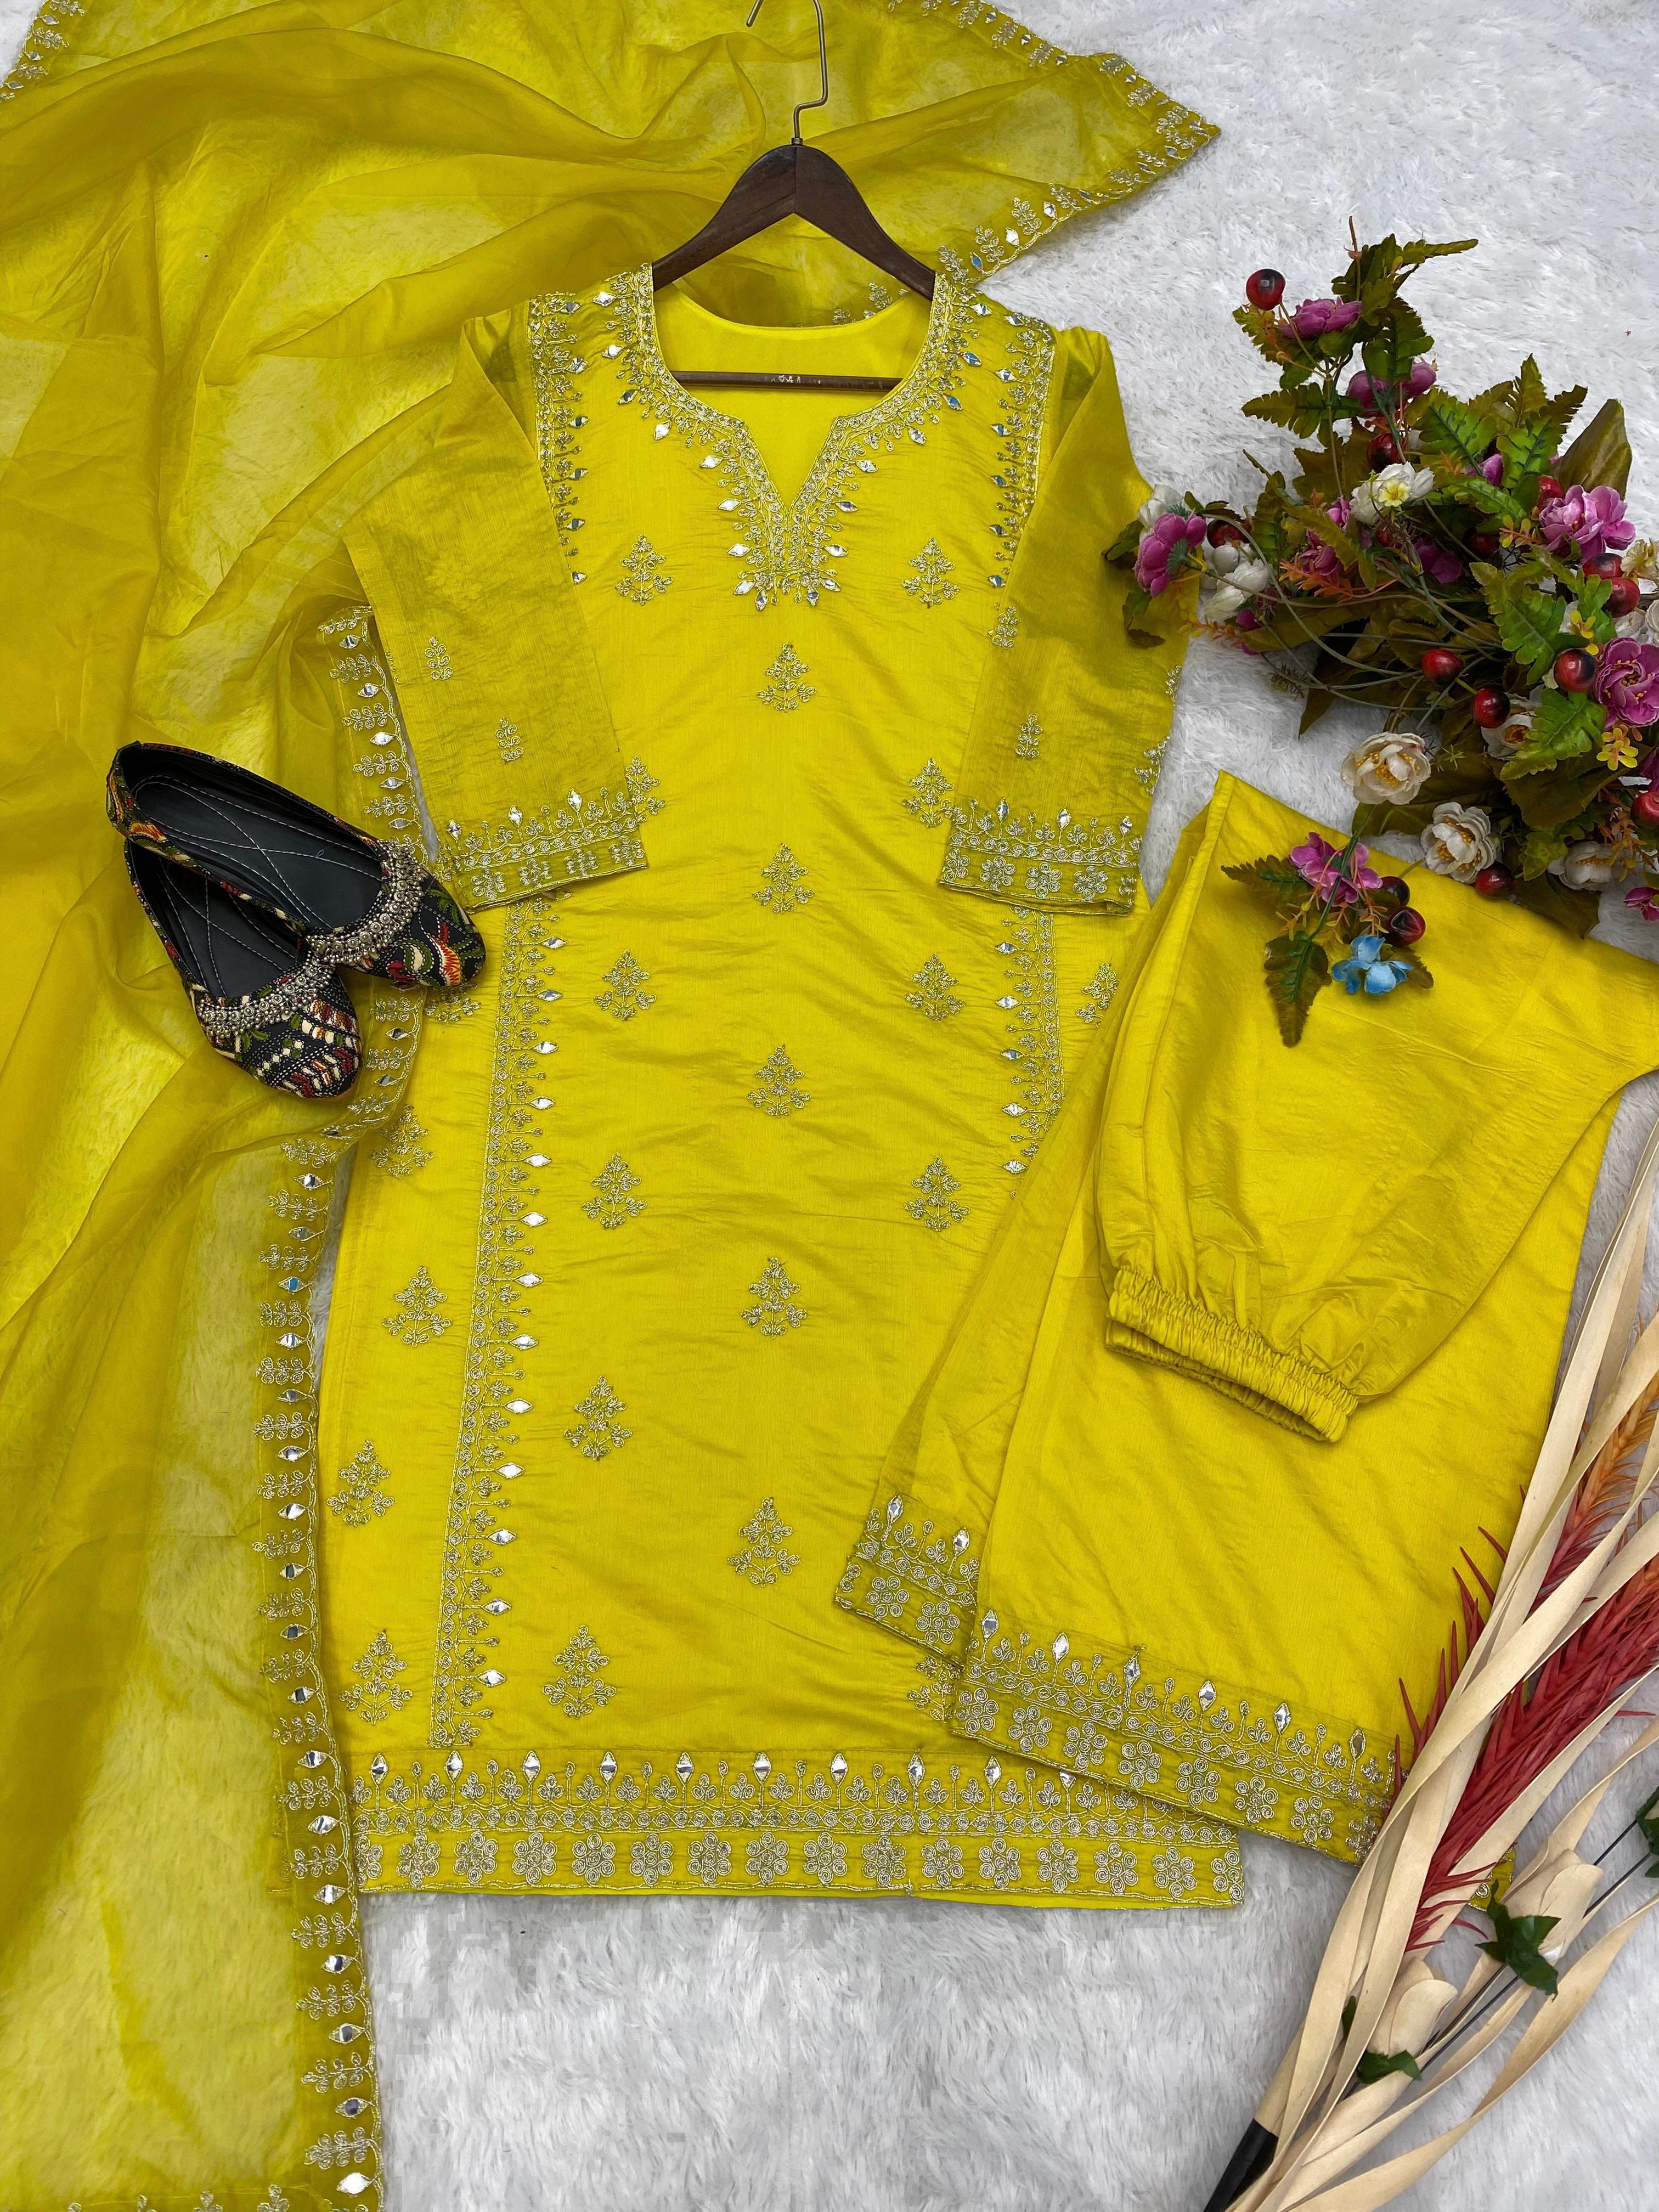 Kiara Advani Wear Yellow Color Palazzo Suit